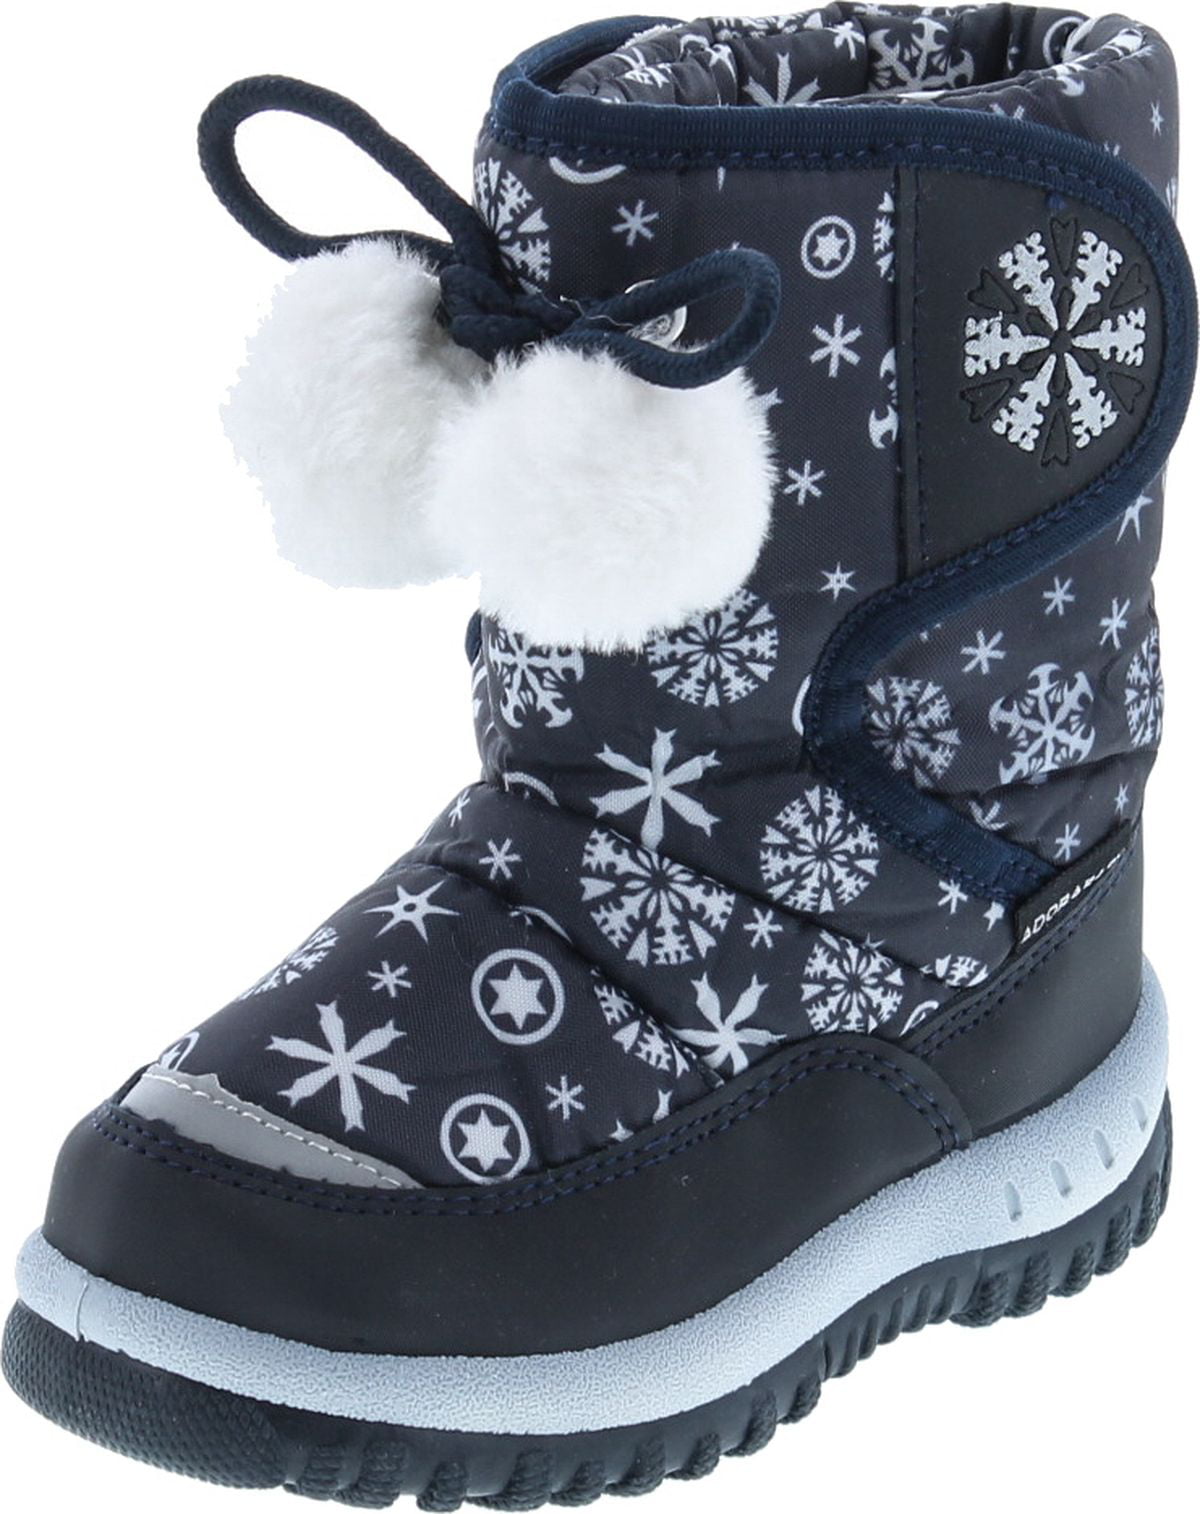 kids snow boots walmart